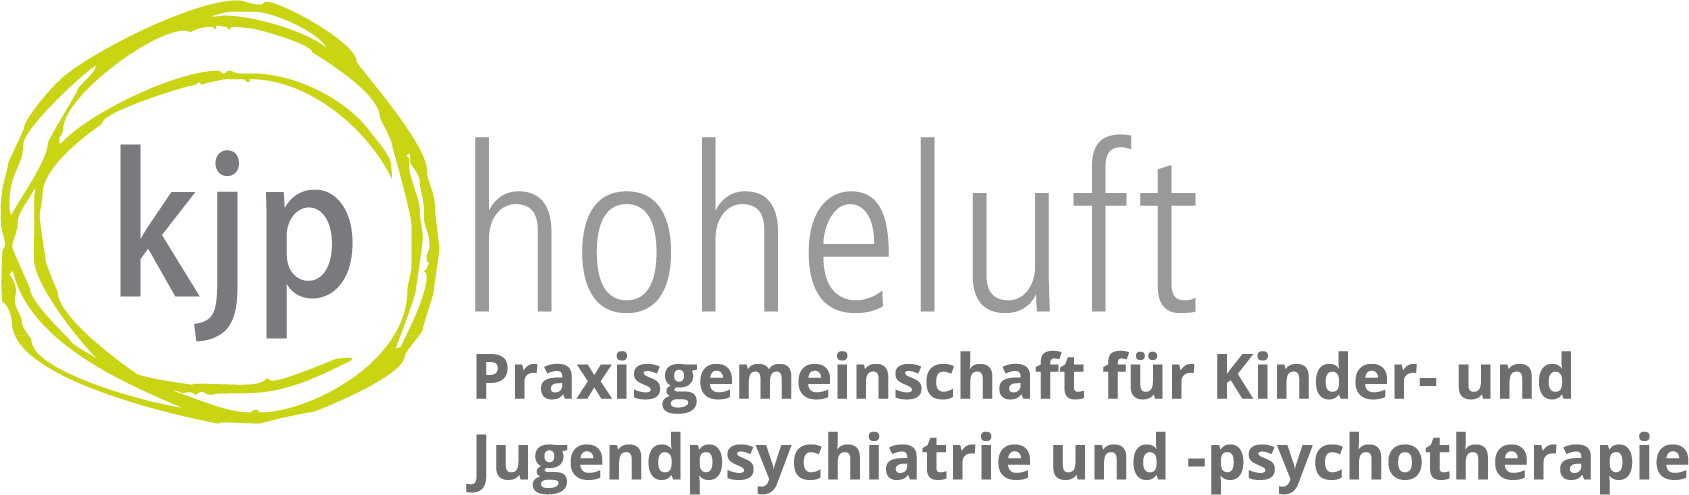 Logo kjp Hoheluft